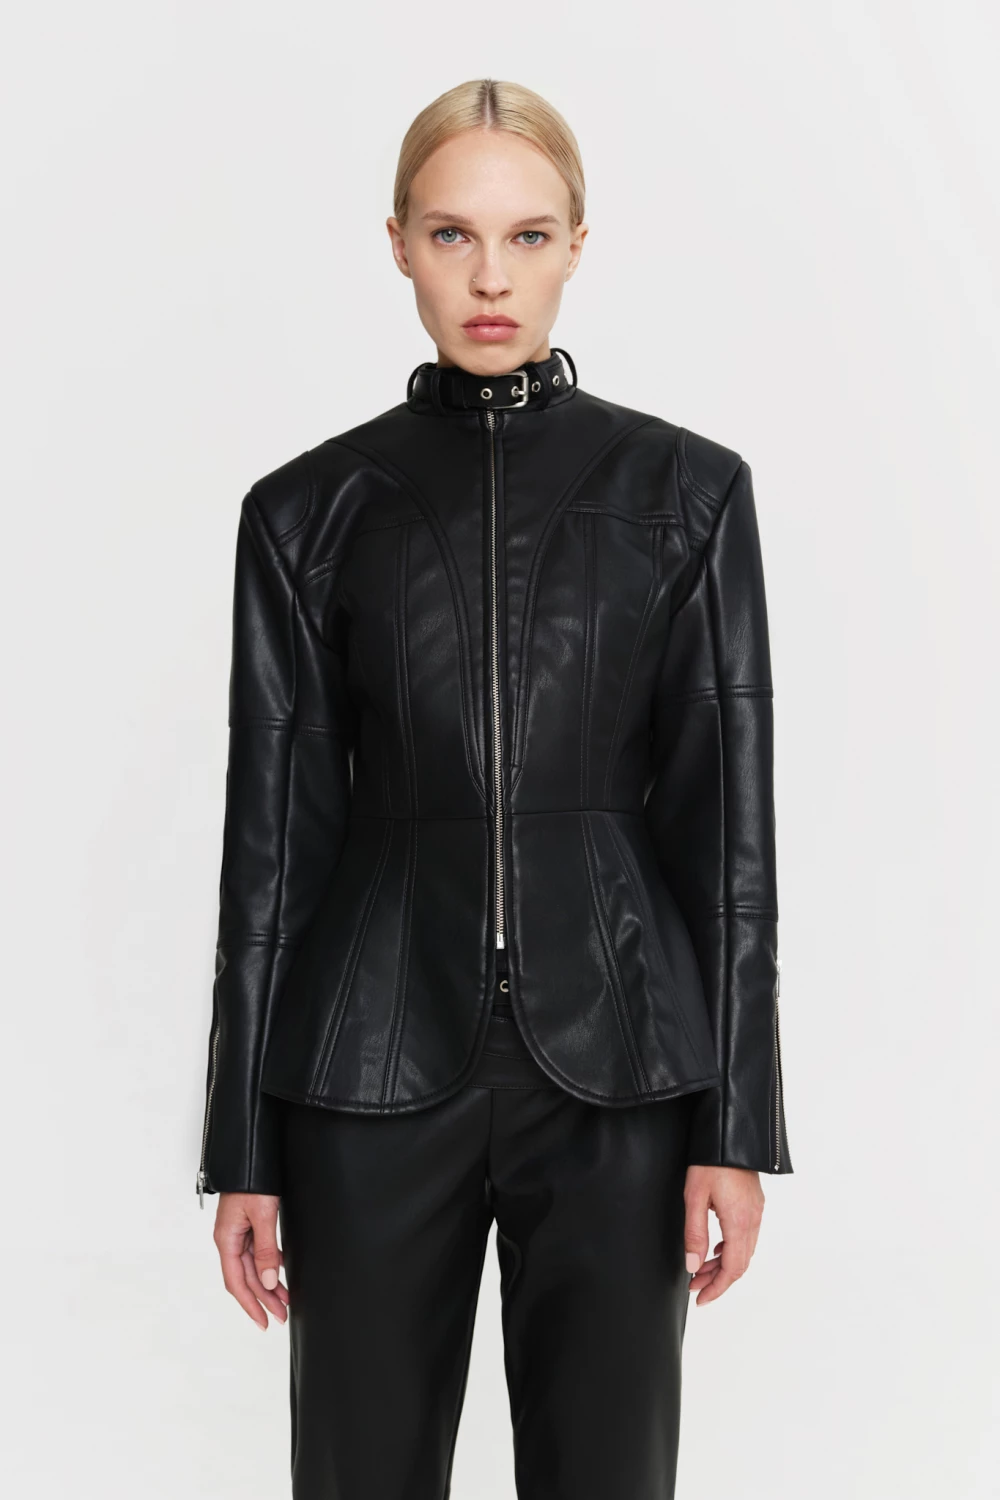 slim-fitted jacket in black color